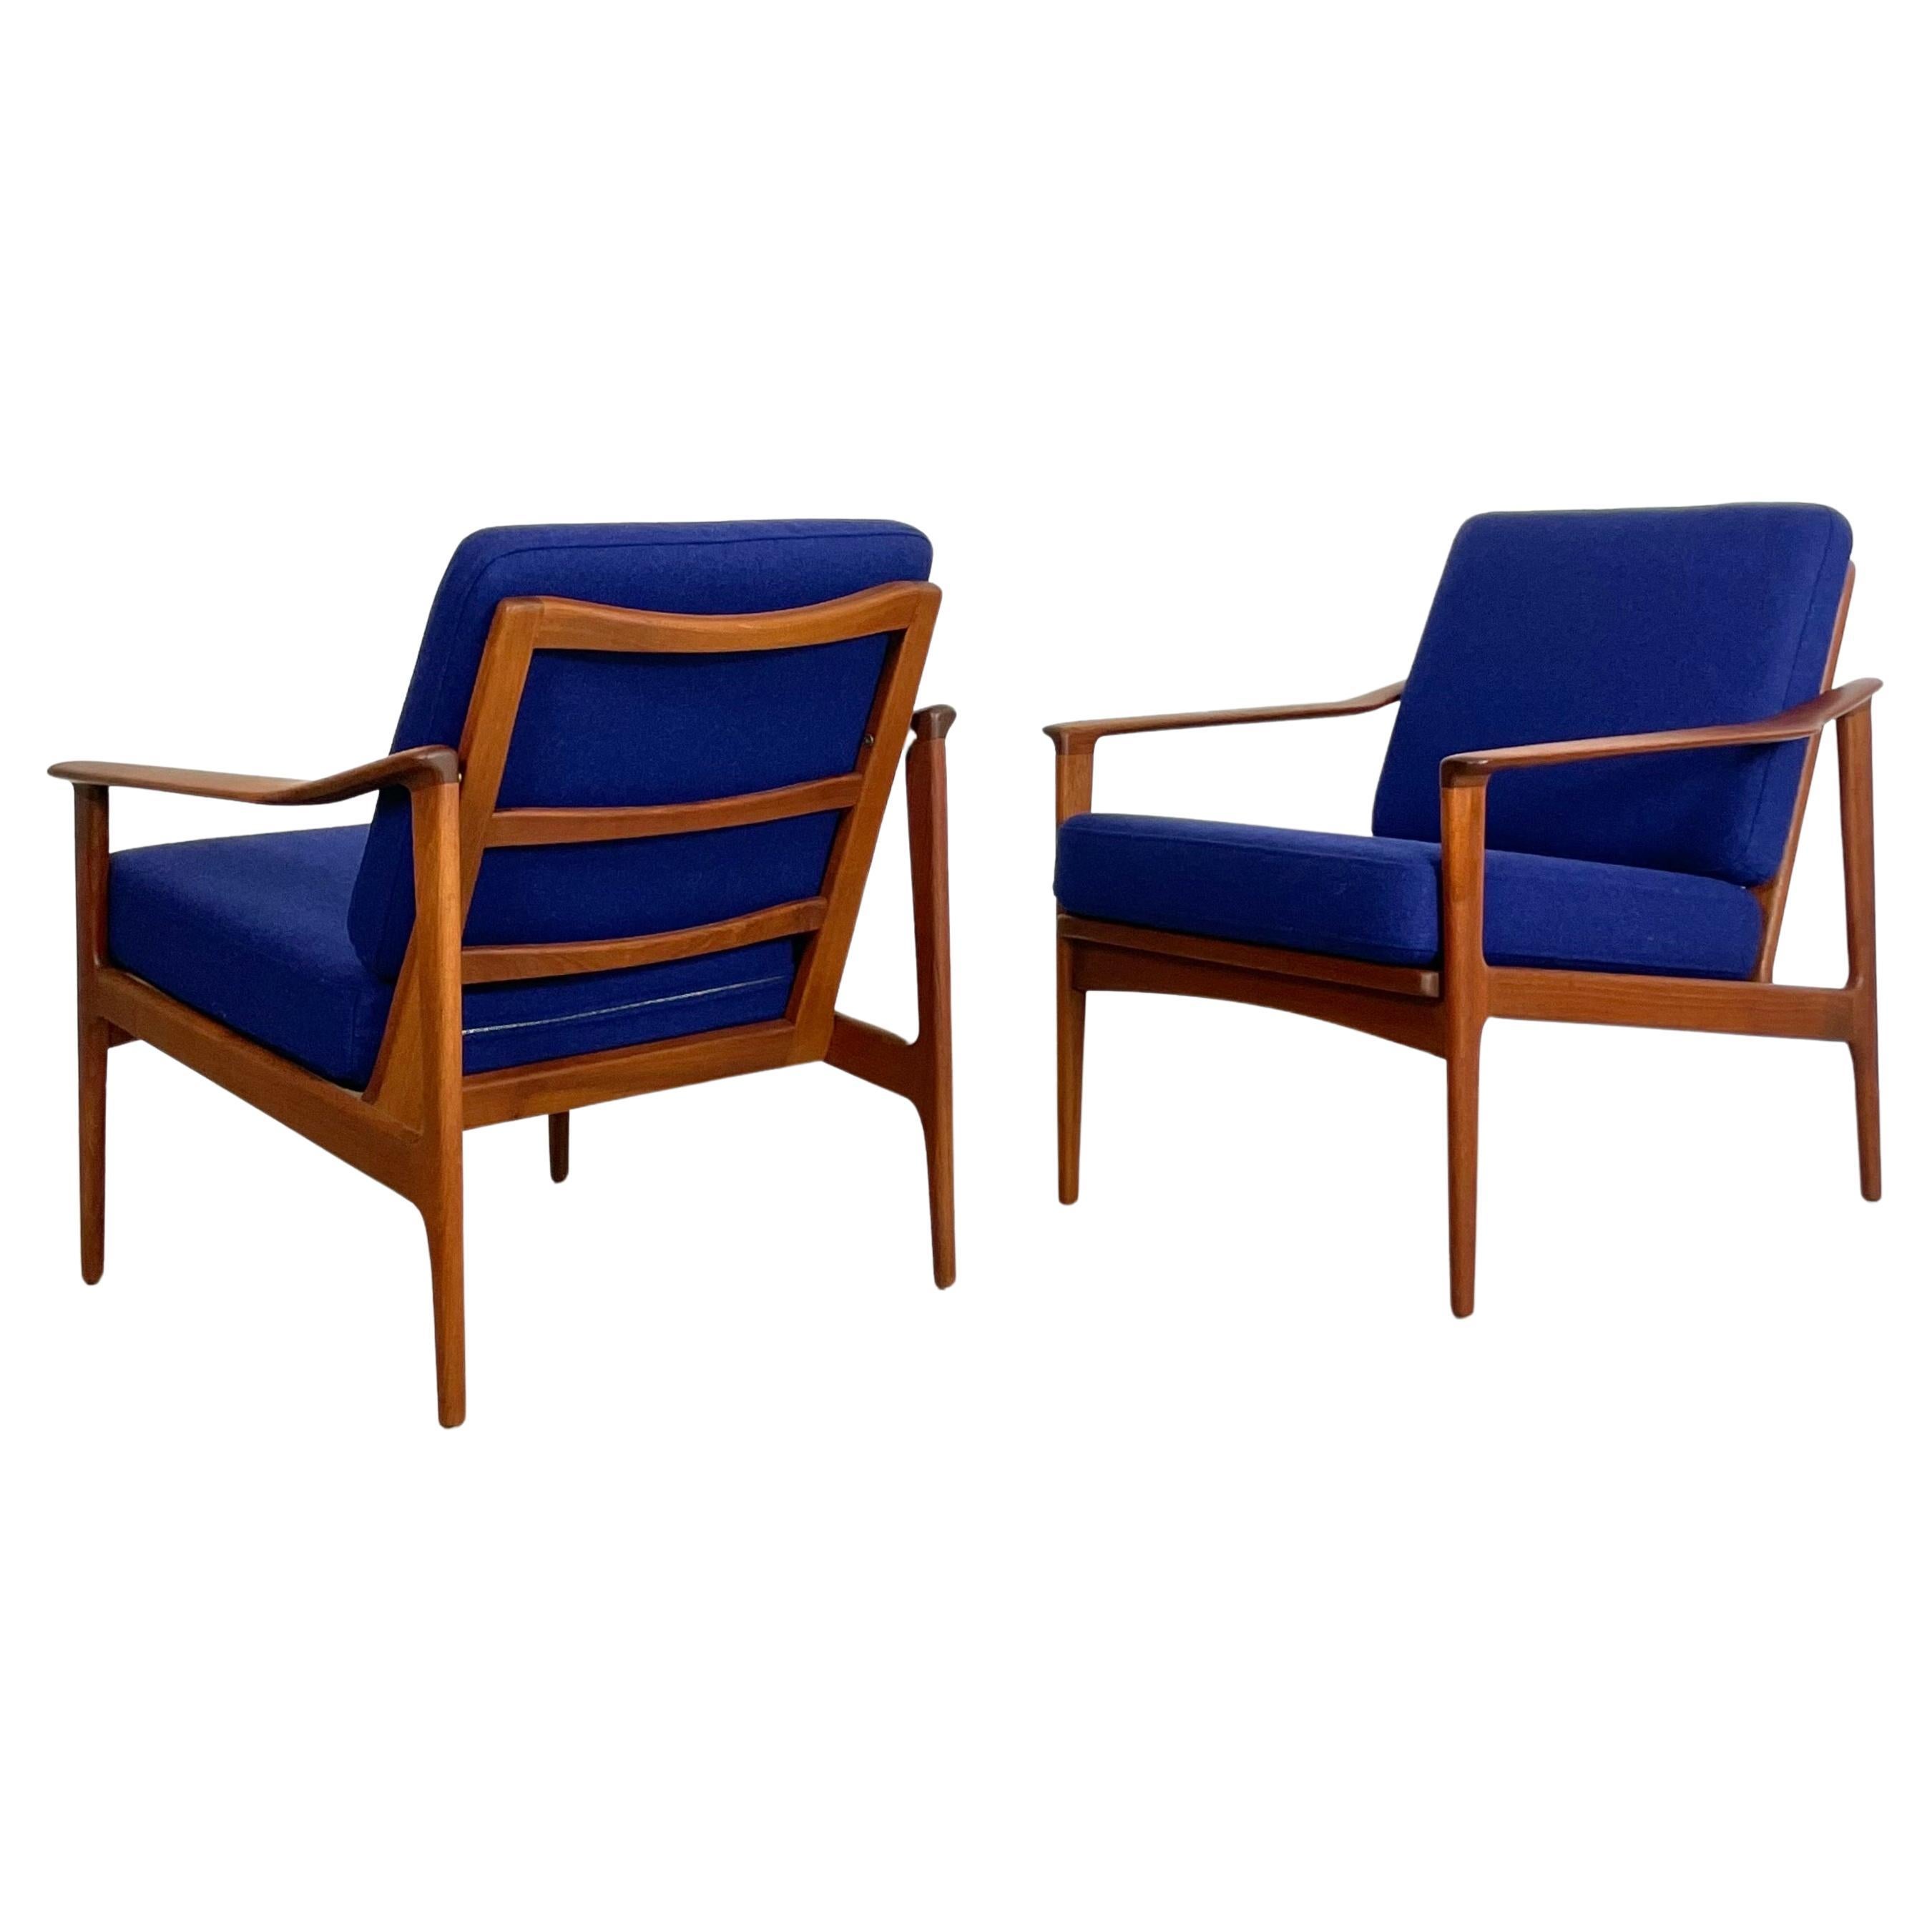 2x Mid-Century Teak Easy Chair by Ib Kofod-Larsen 1960s Denmark